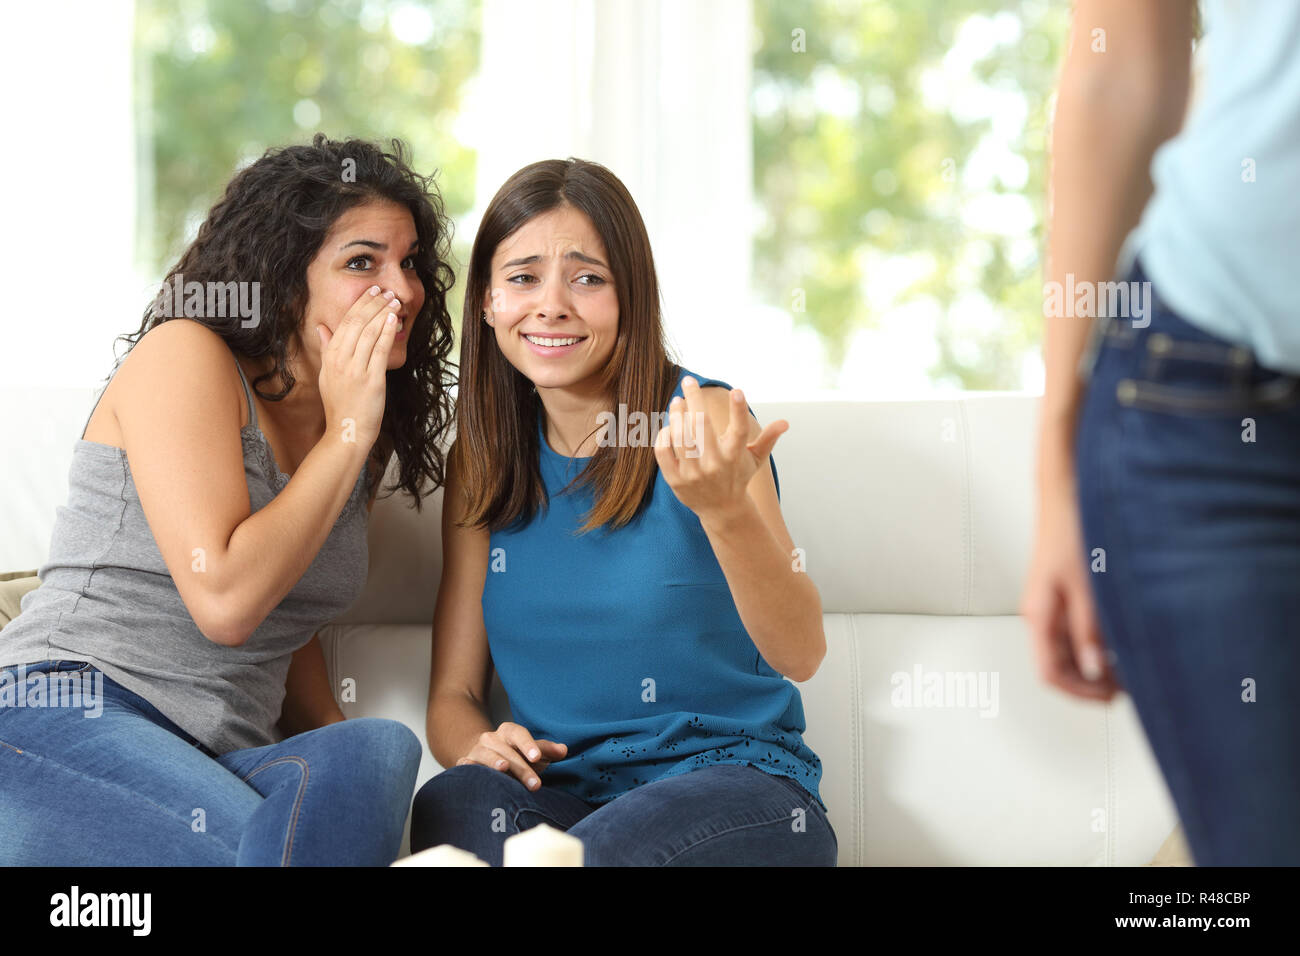 Gossip girls criticizing another woman Stock Photo